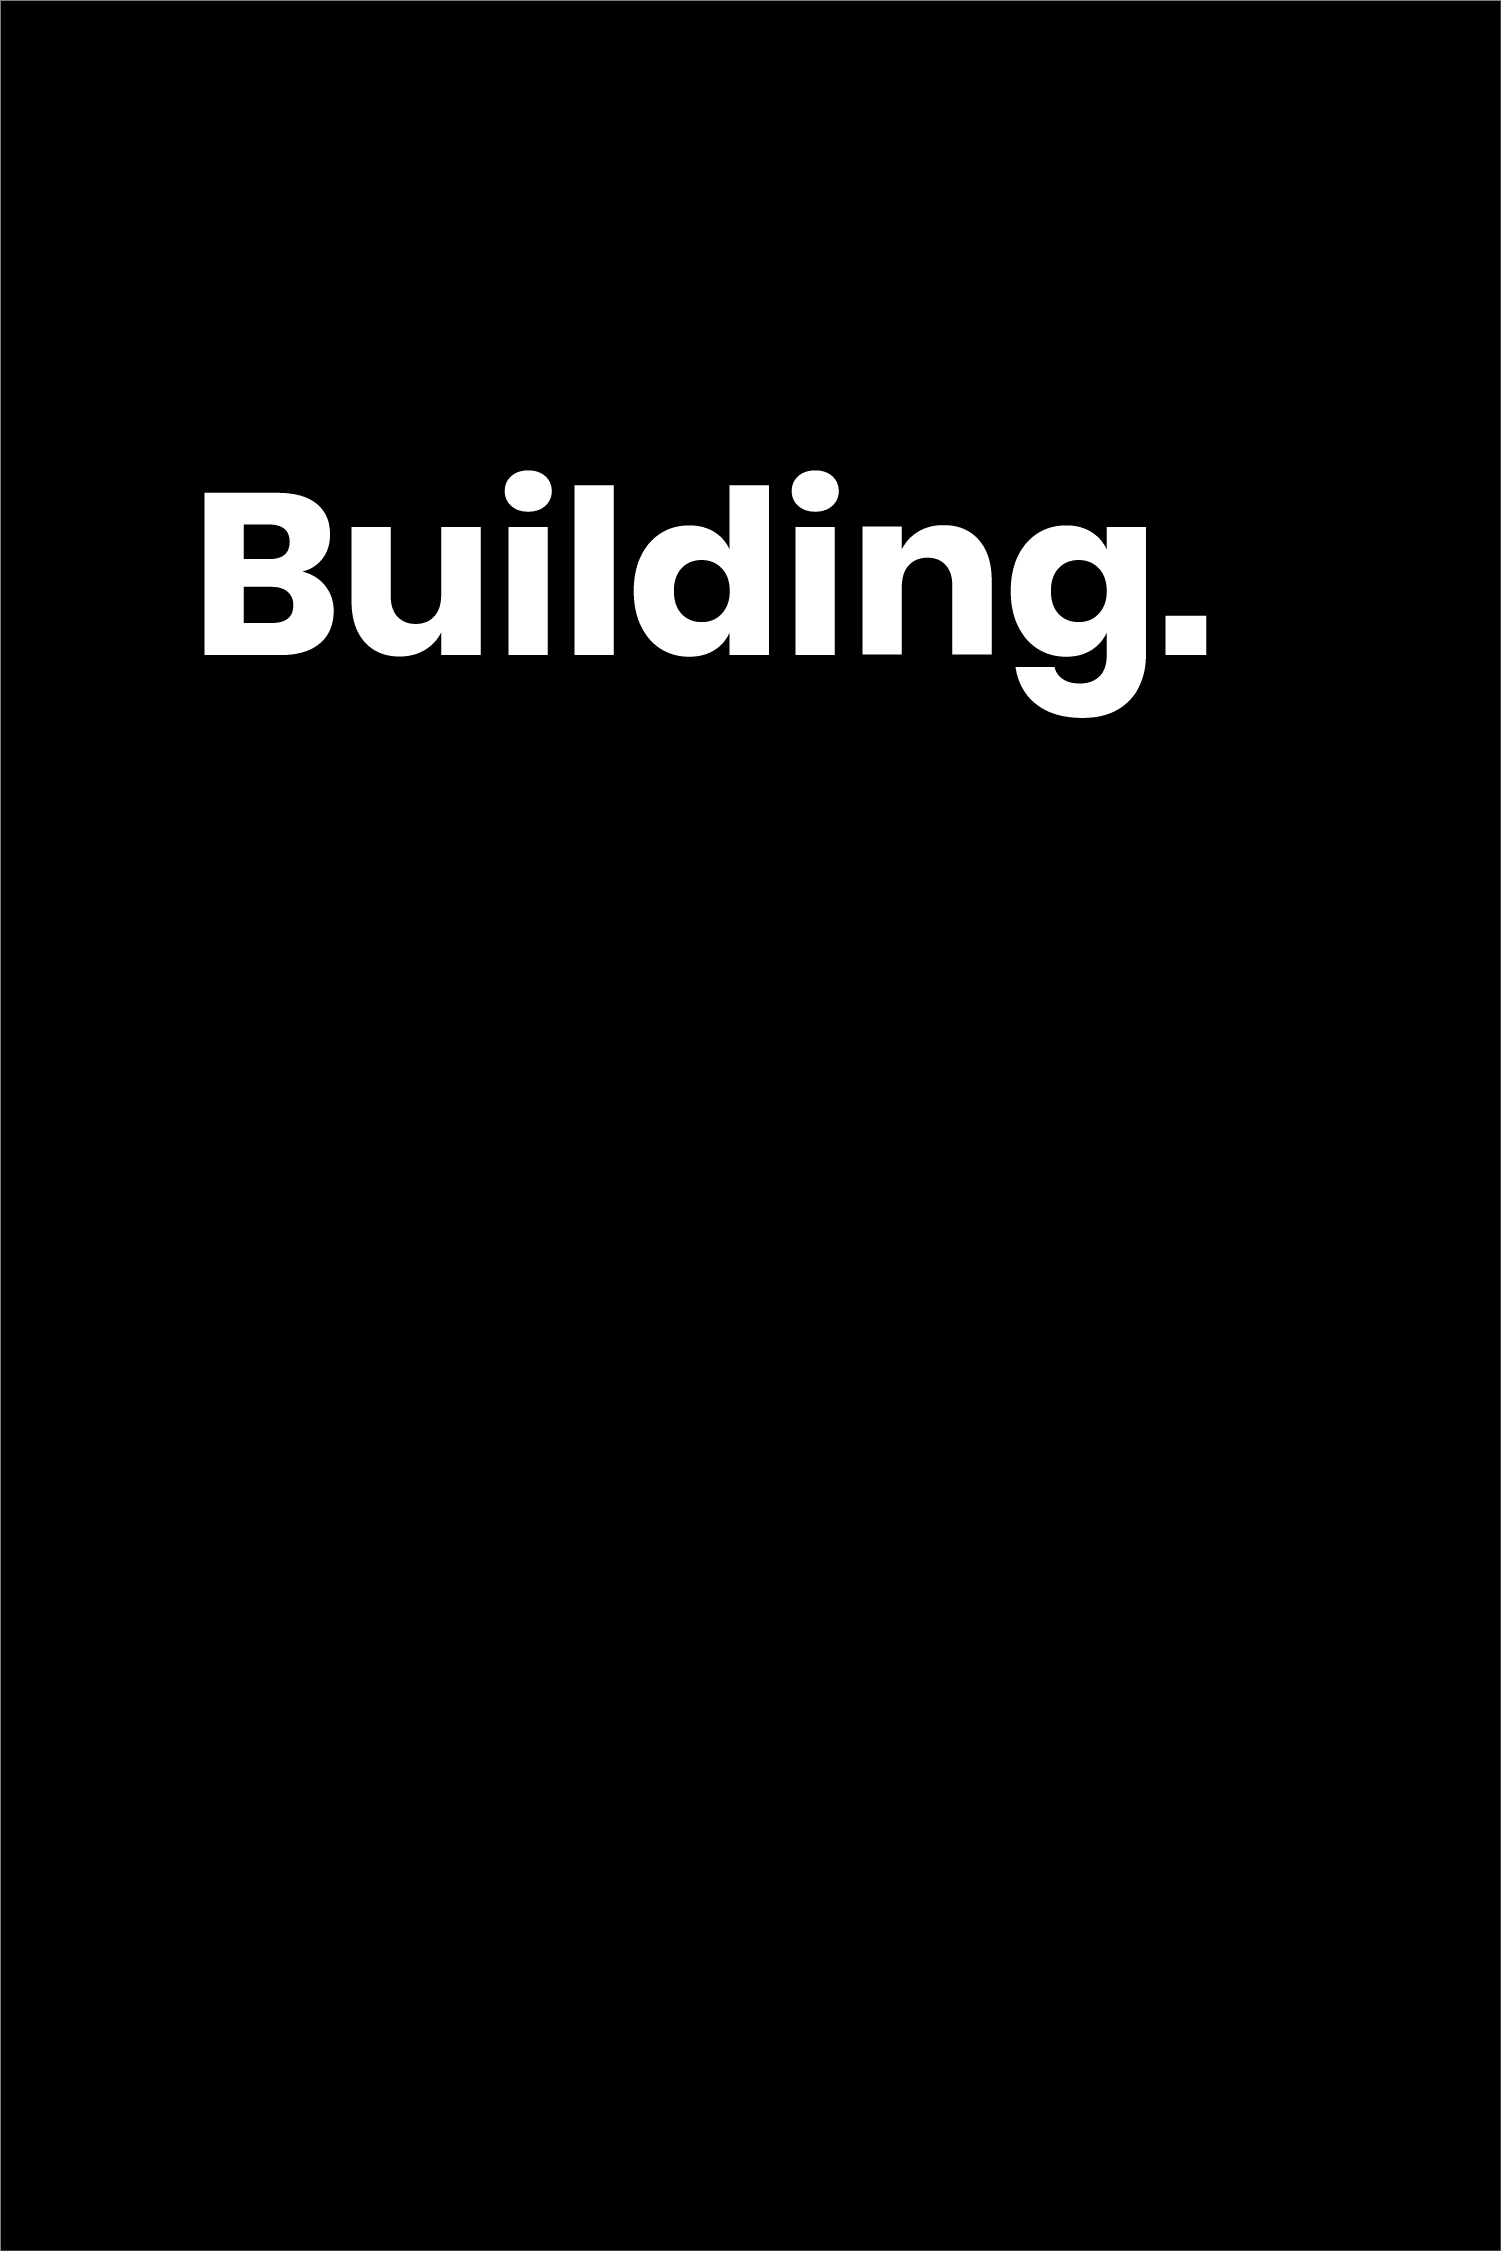 Building.